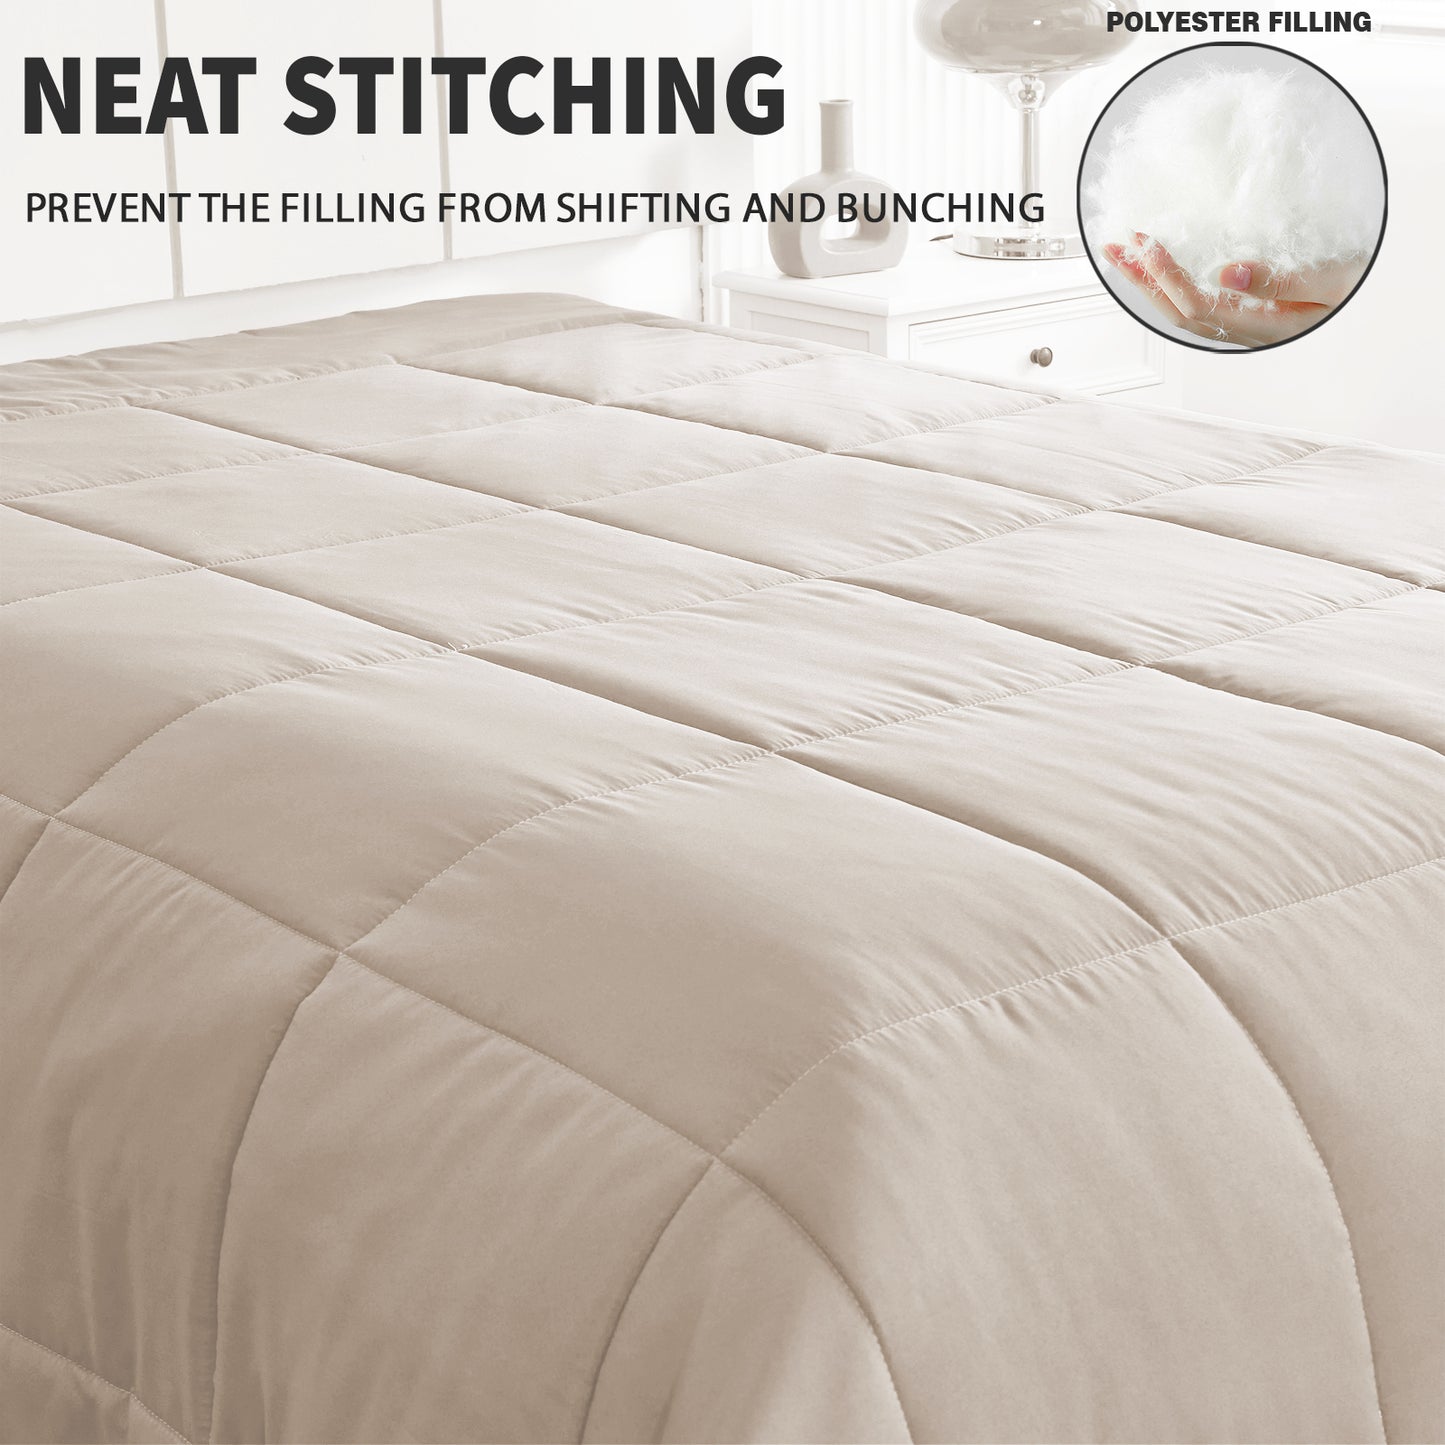 Exclusivo Mezcla Lightweight Reversible 2-Piece Comforter Set All Seasons, Down Alternative Comforter with 1 Pillow Sham, Twin Size, Beige/White